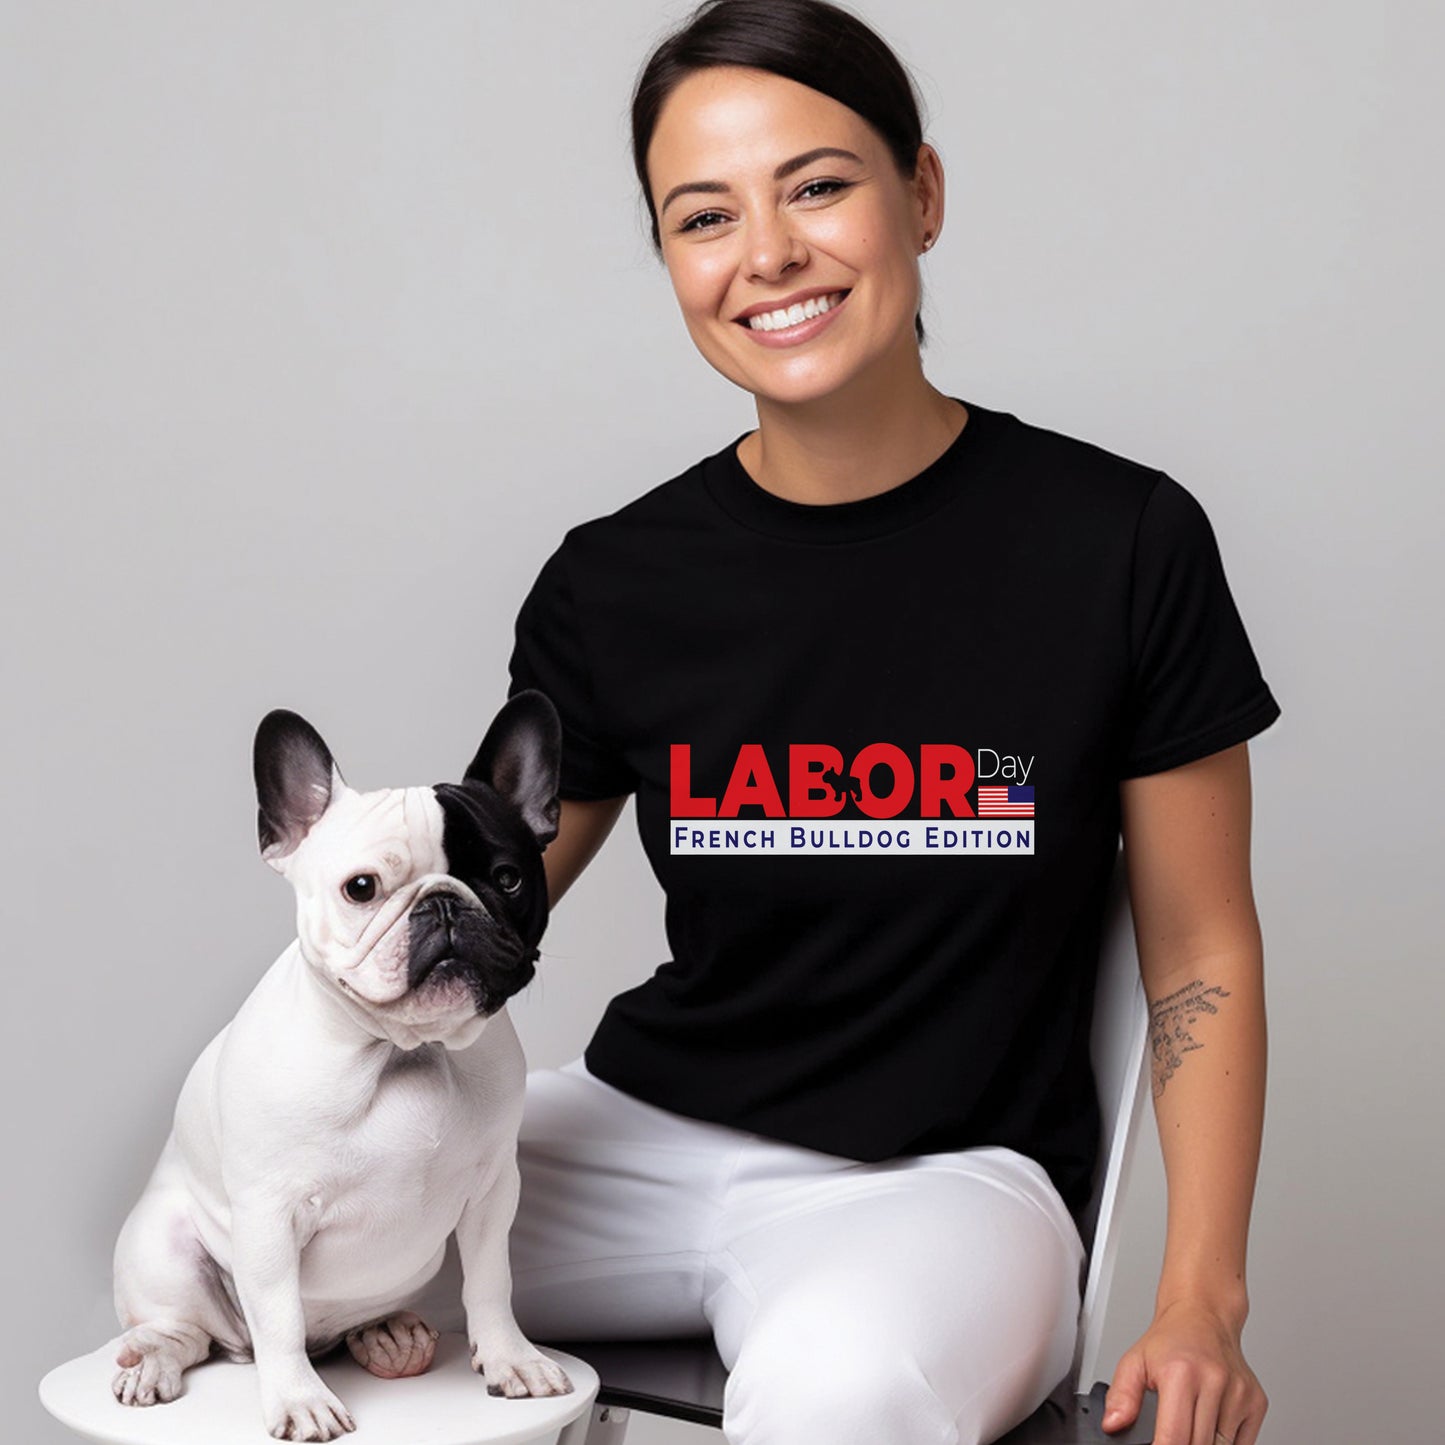 Labor Day Style - Unisex T-Shirt